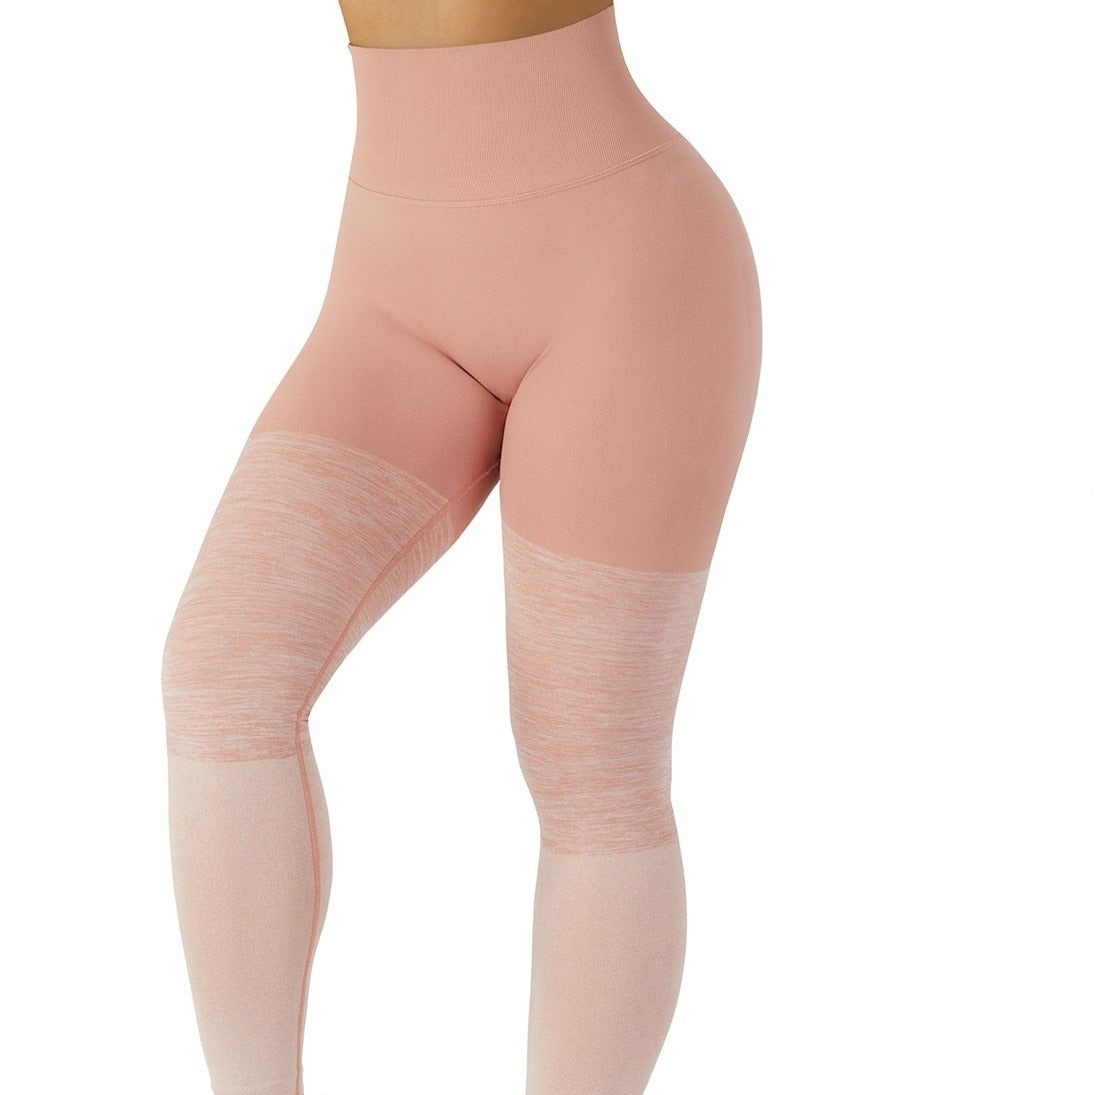 pink thigh high sock leggings similar to bombshell sportswear